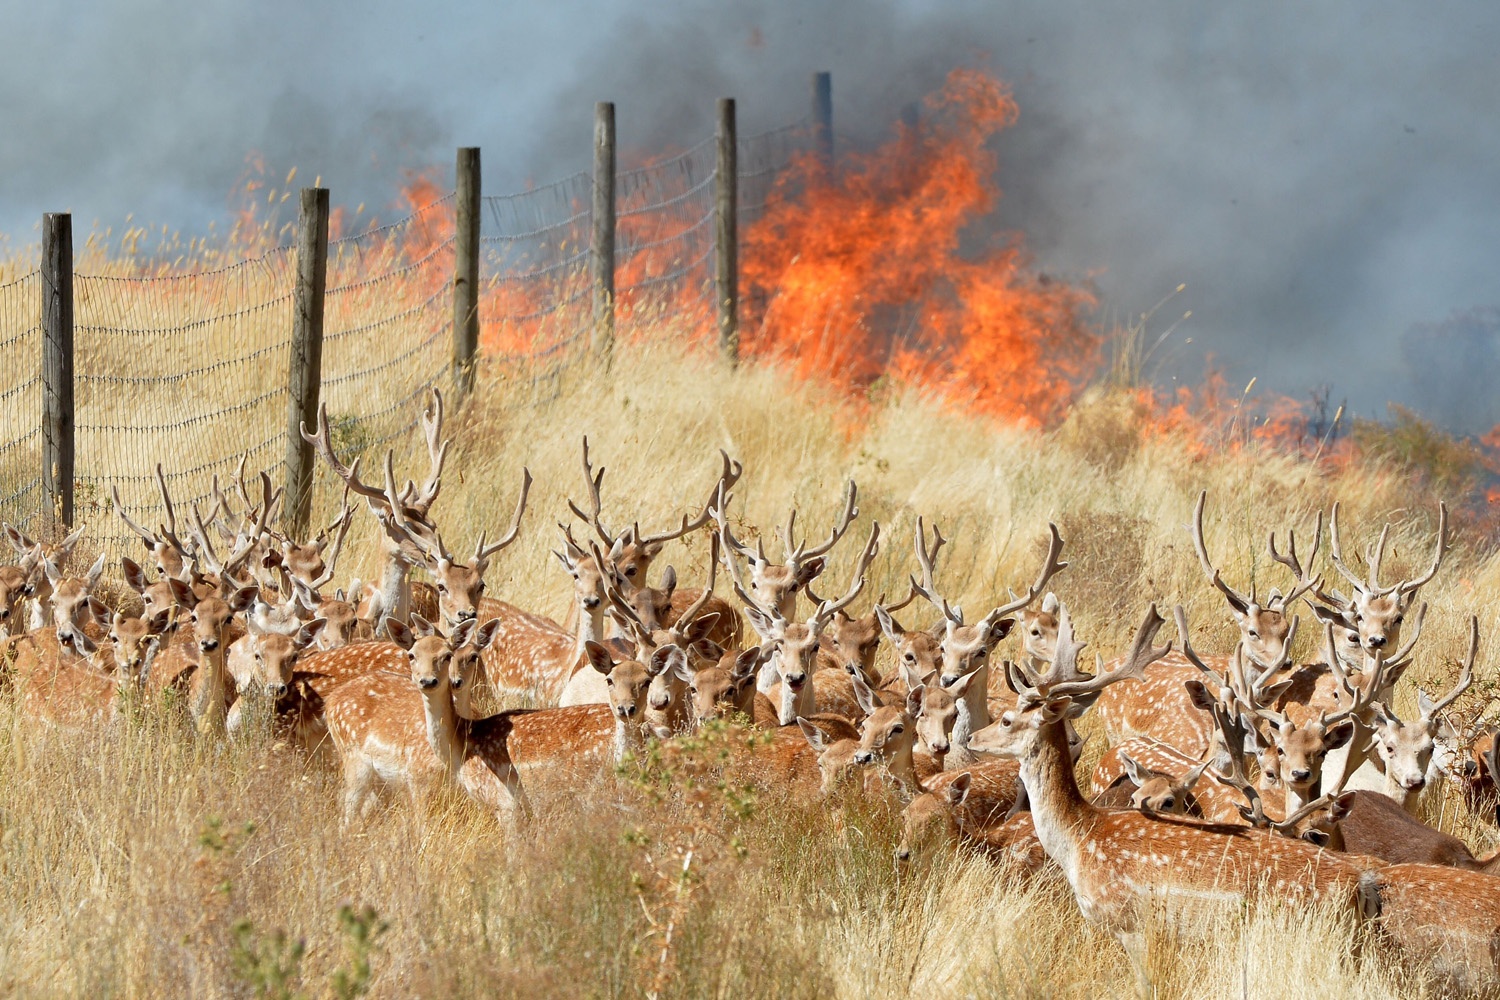 Feb. 9, 2014. Deer in a bushfire in Gisborne, Victoria, Australia.